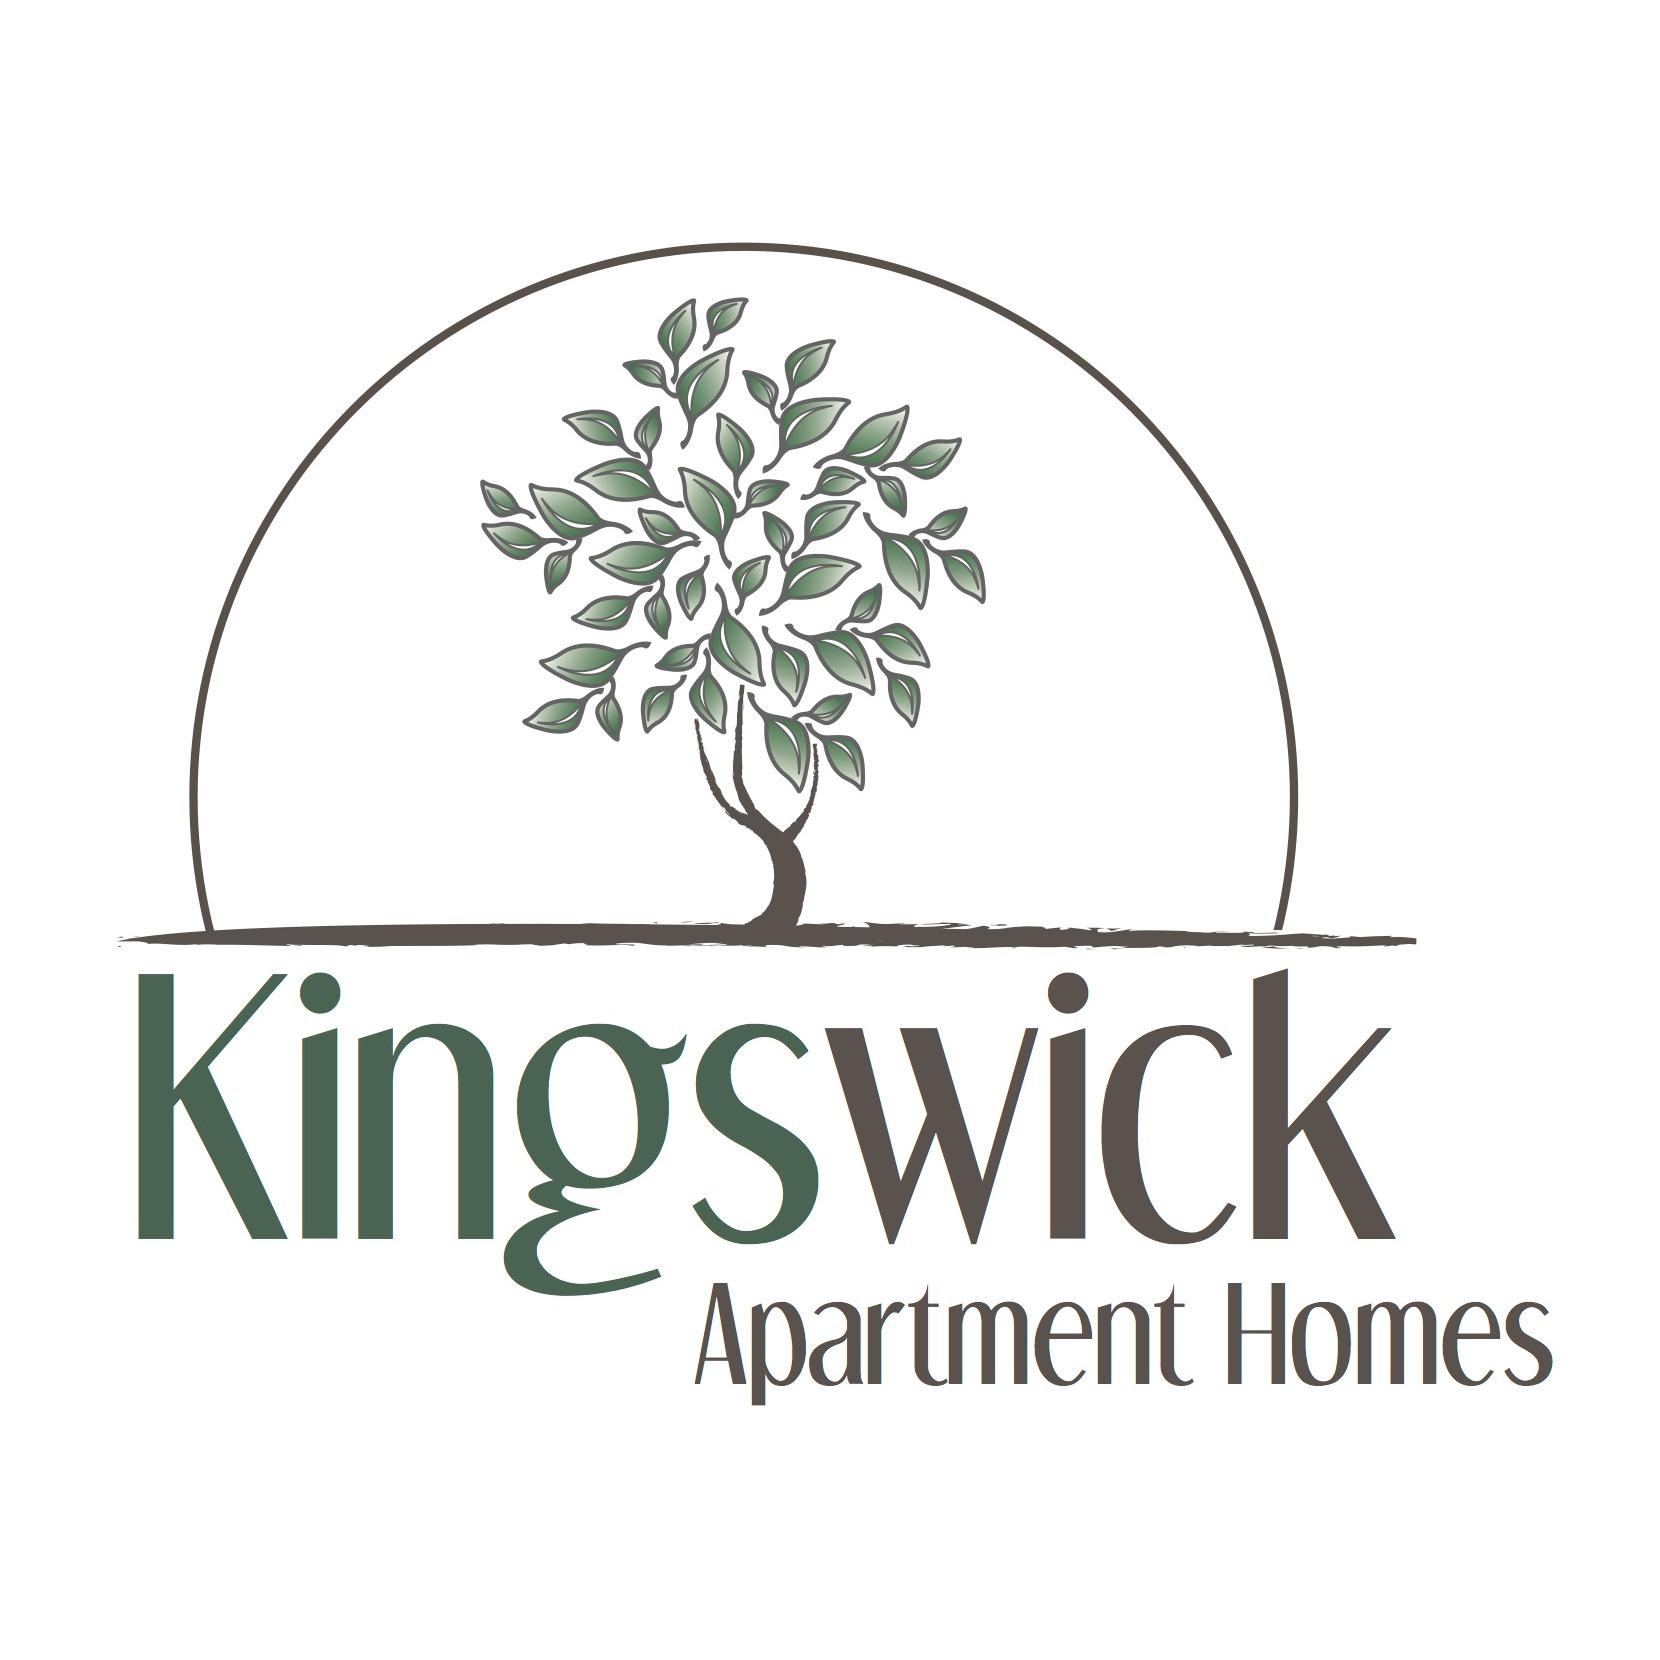 Kingswick Apartments - West Deptford, NJ 08086 - (856)848-2276 | ShowMeLocal.com